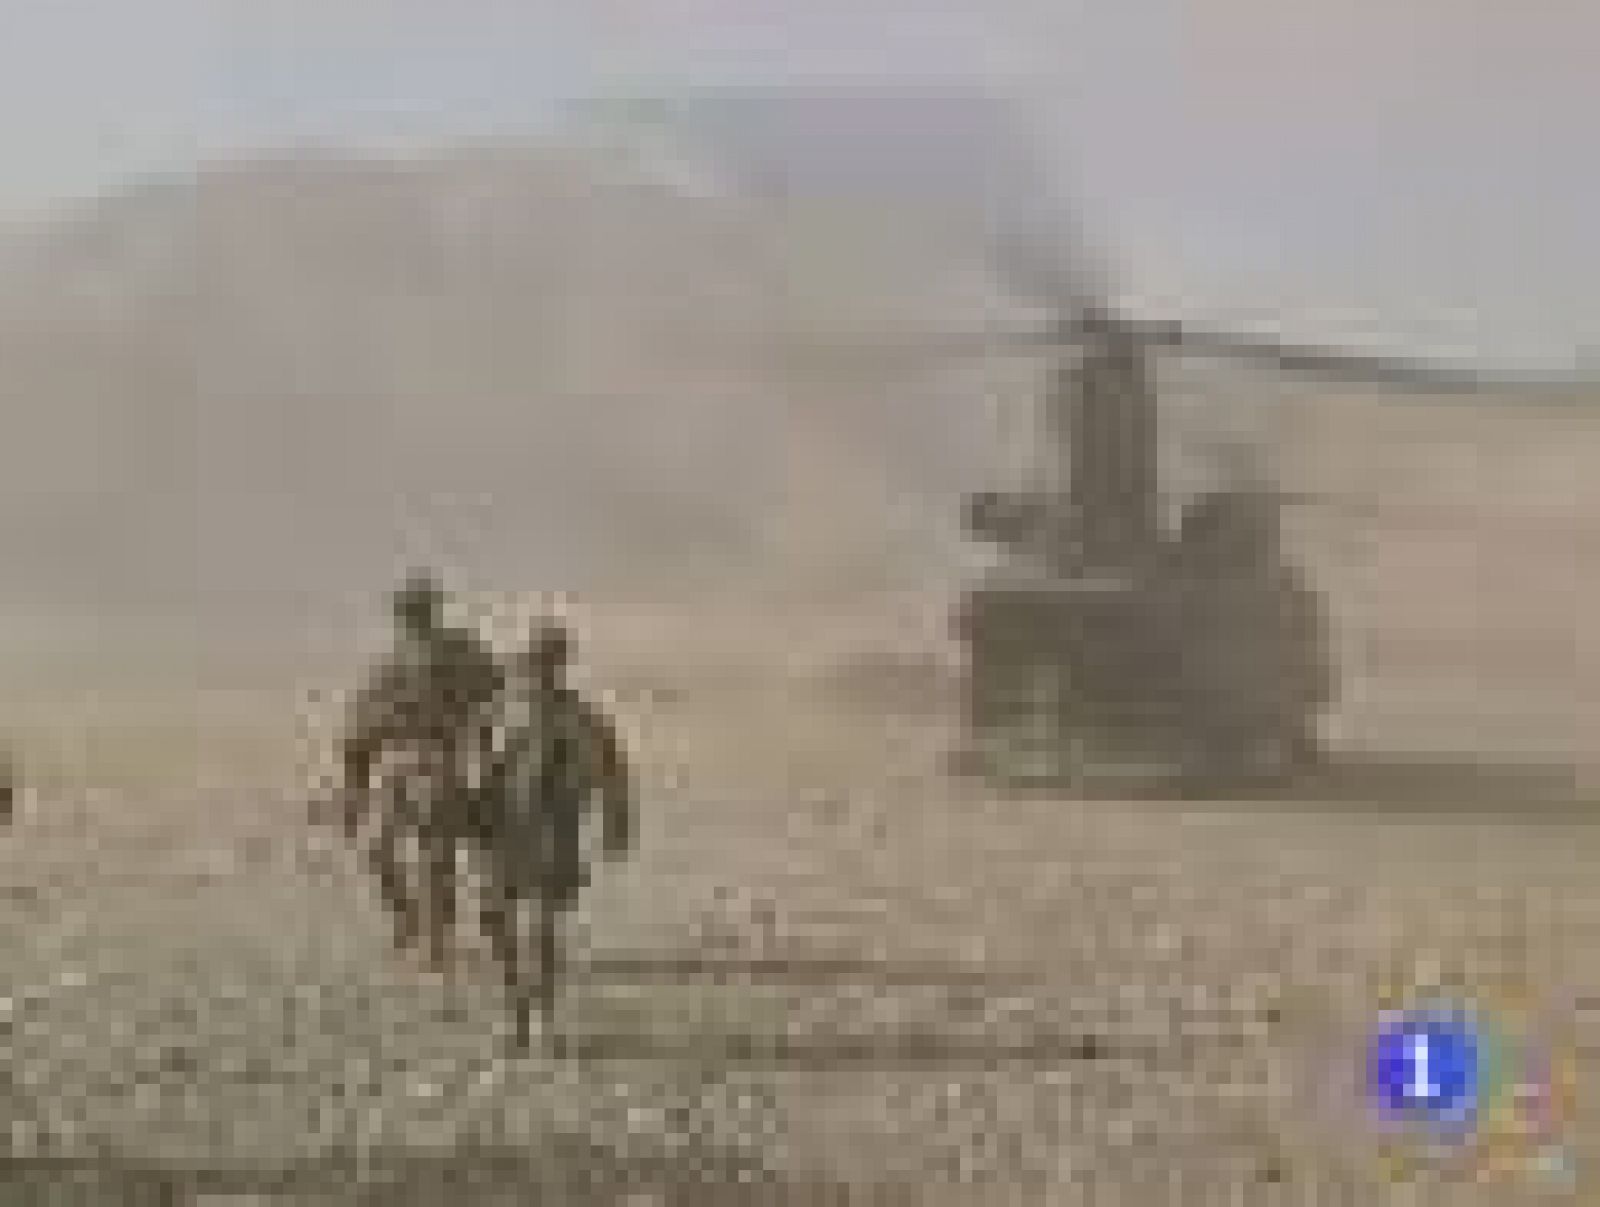 38 militares estadounidenses muertes en un accidente aéreo en Afganistan